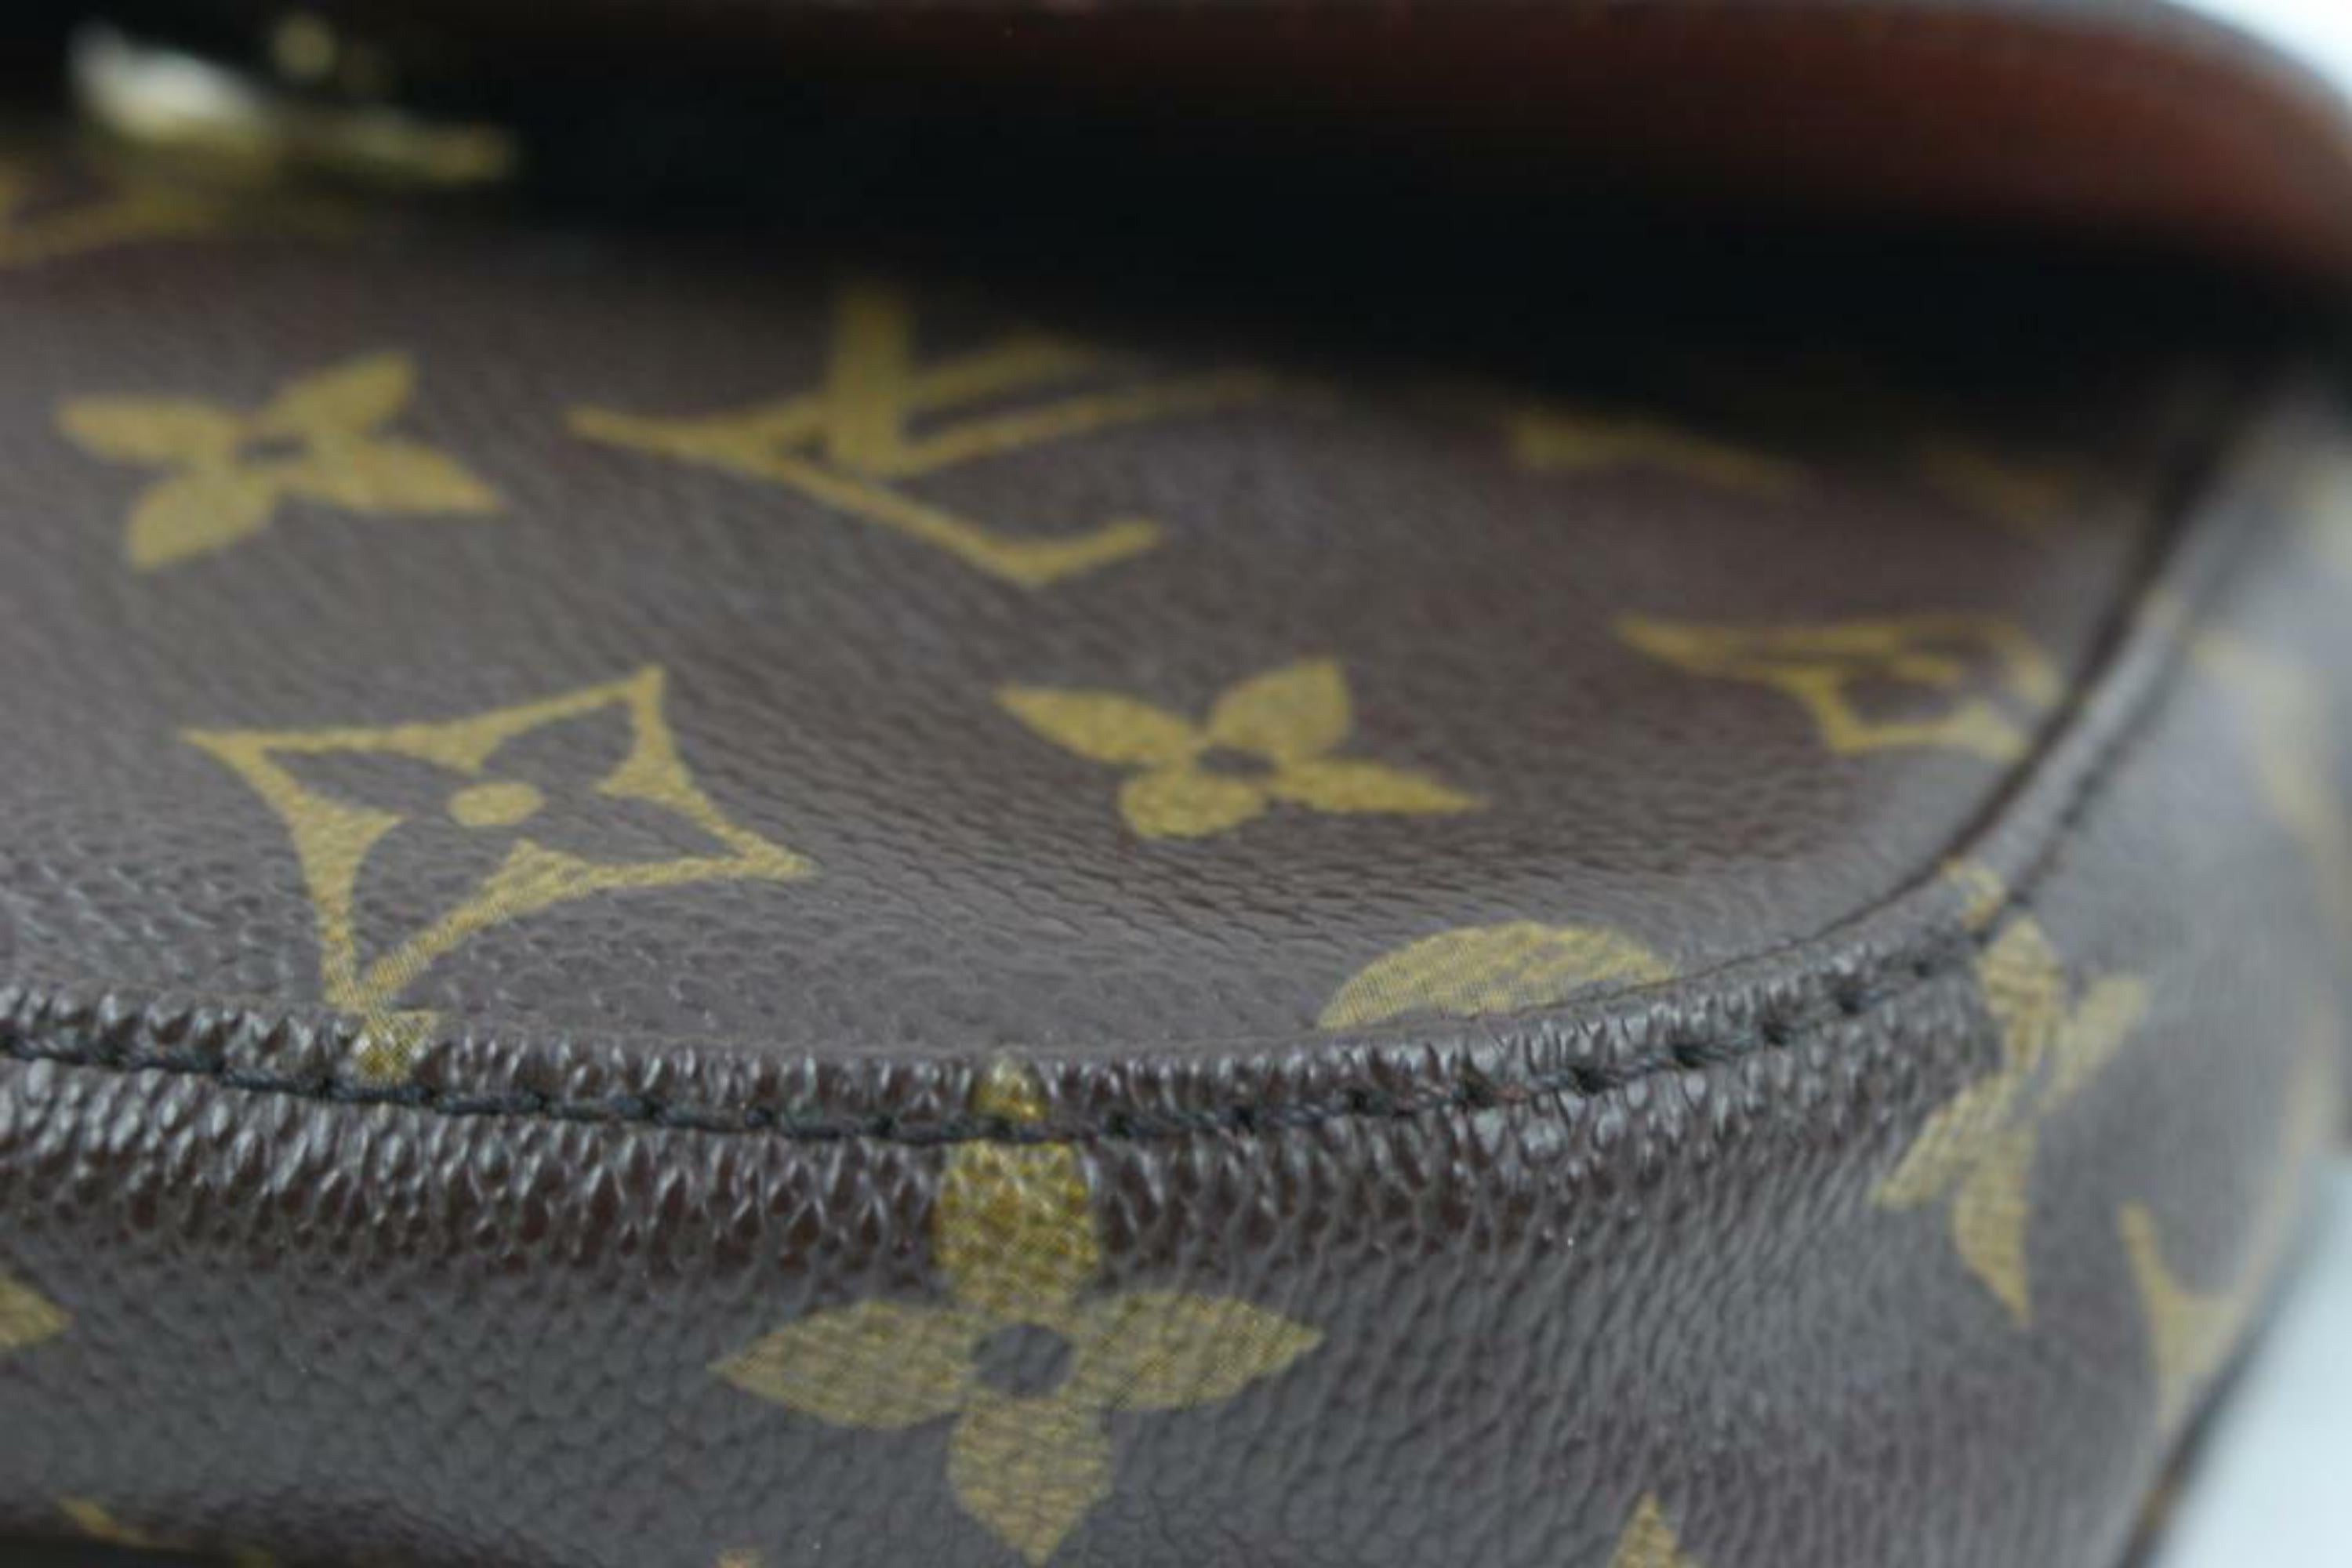 Louis Vuitton Monogram Saint Cloud PM Crossbody Bag 31L26a www